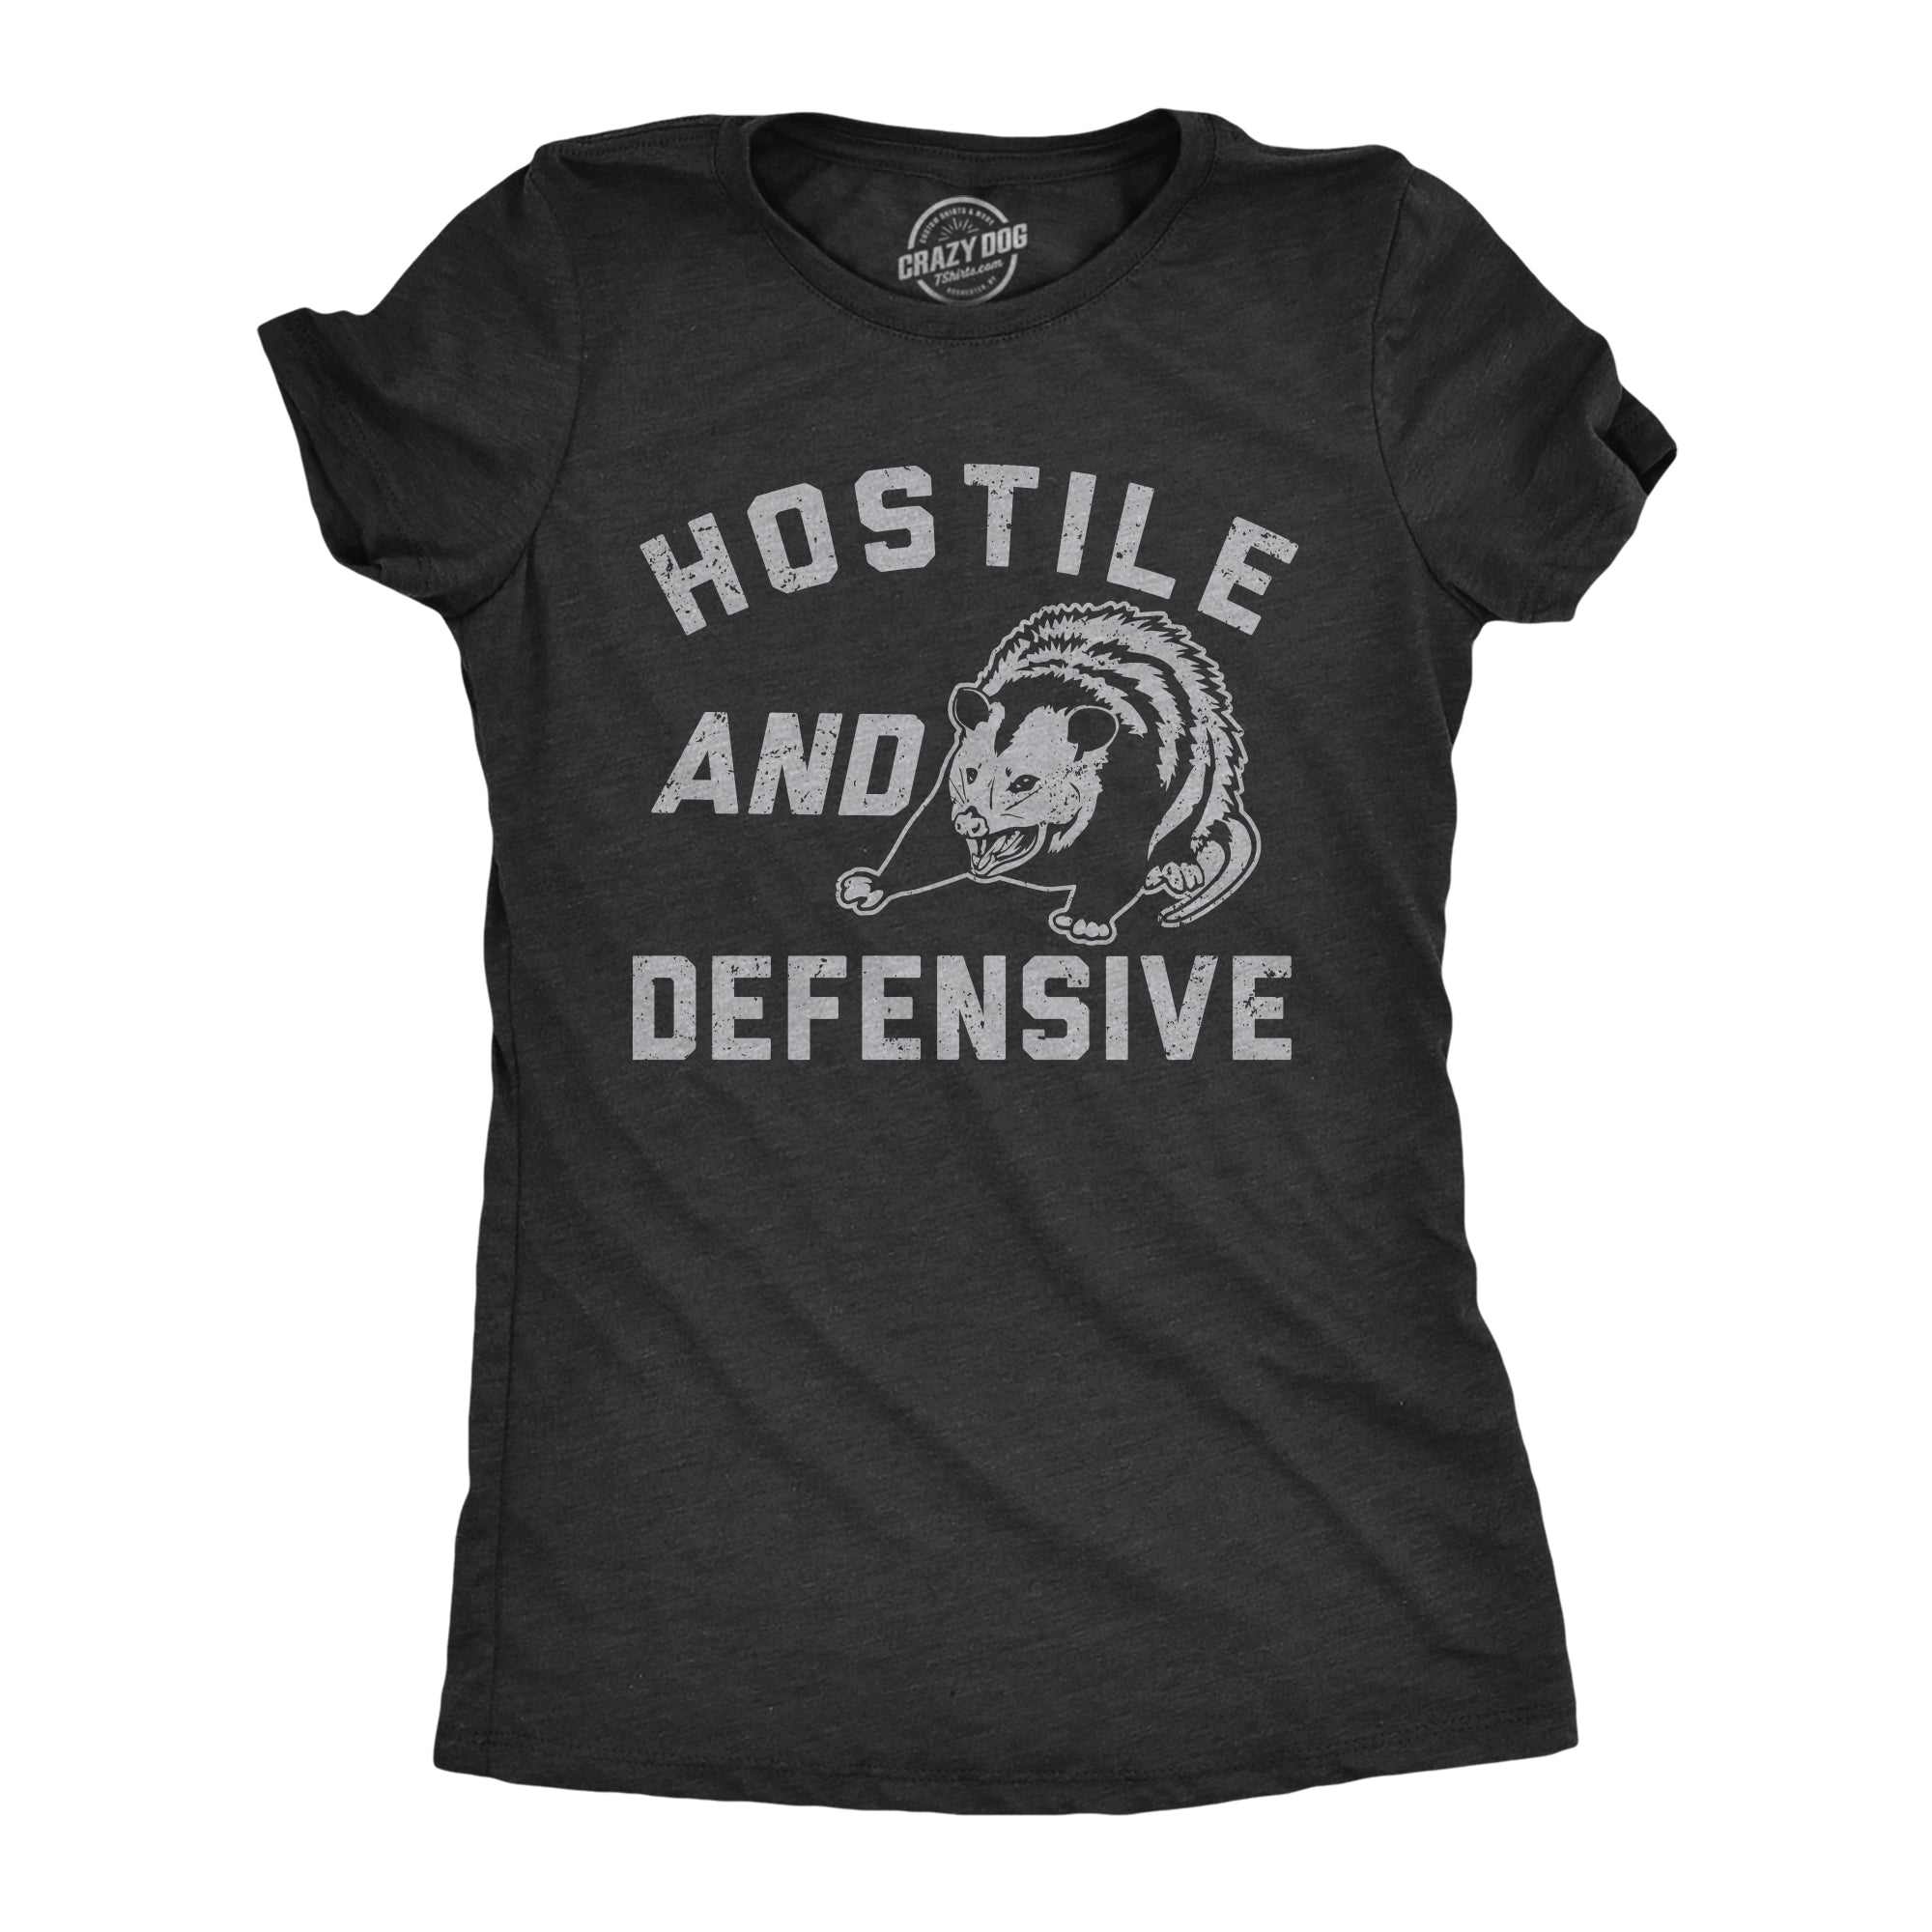 Funny Heather Black - HOSTILE Hostile And Defensive Womens T Shirt Nerdy Sarcastic Tee